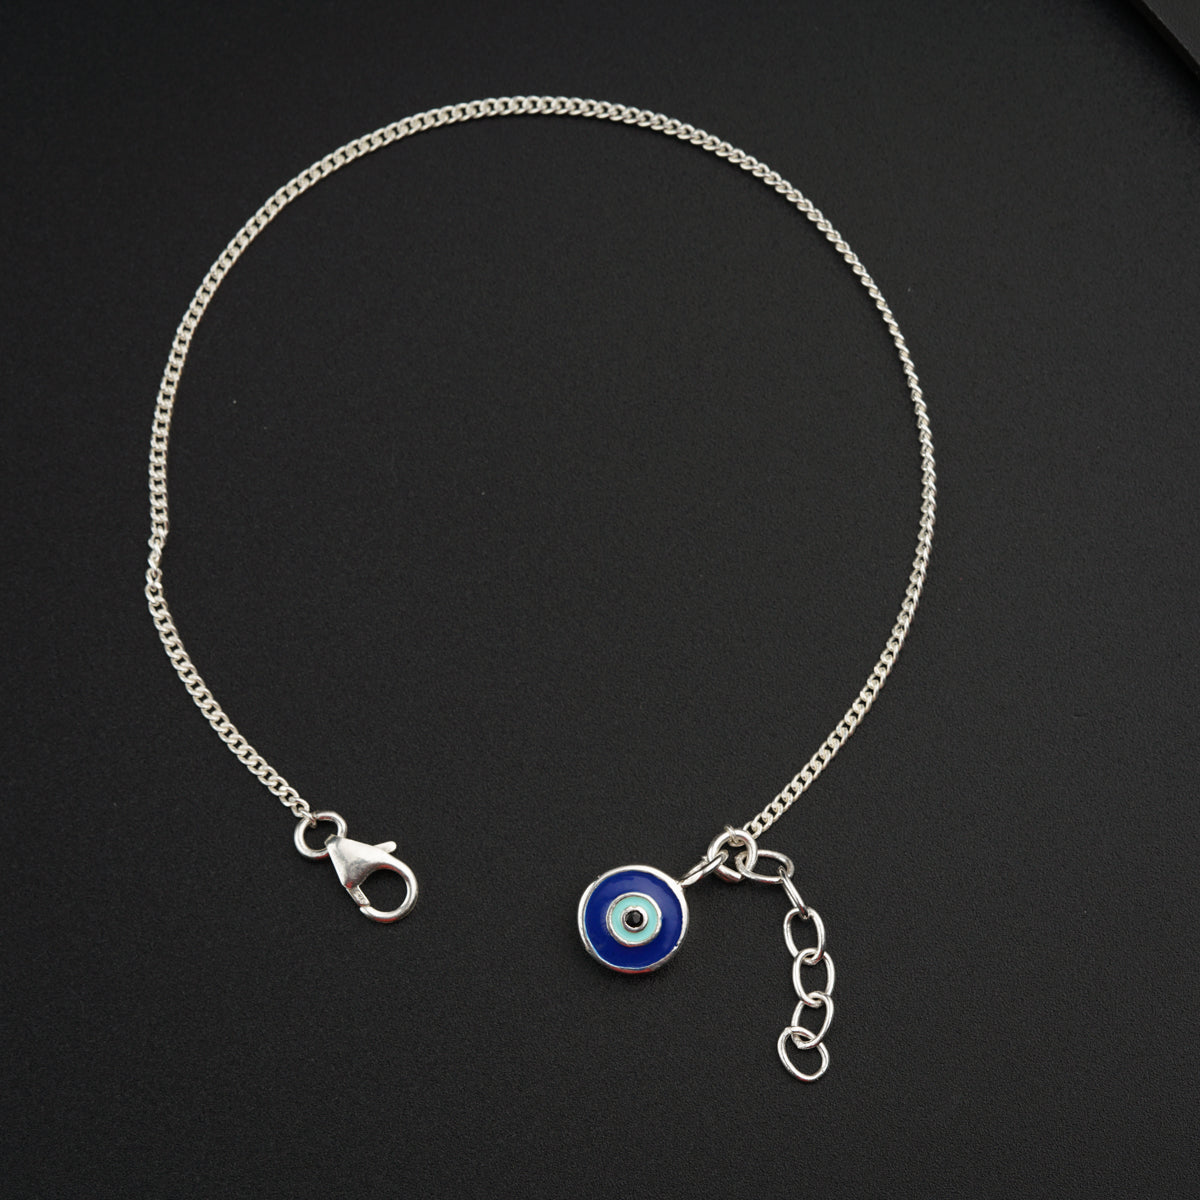 a blue evil eye charm on a silver chain